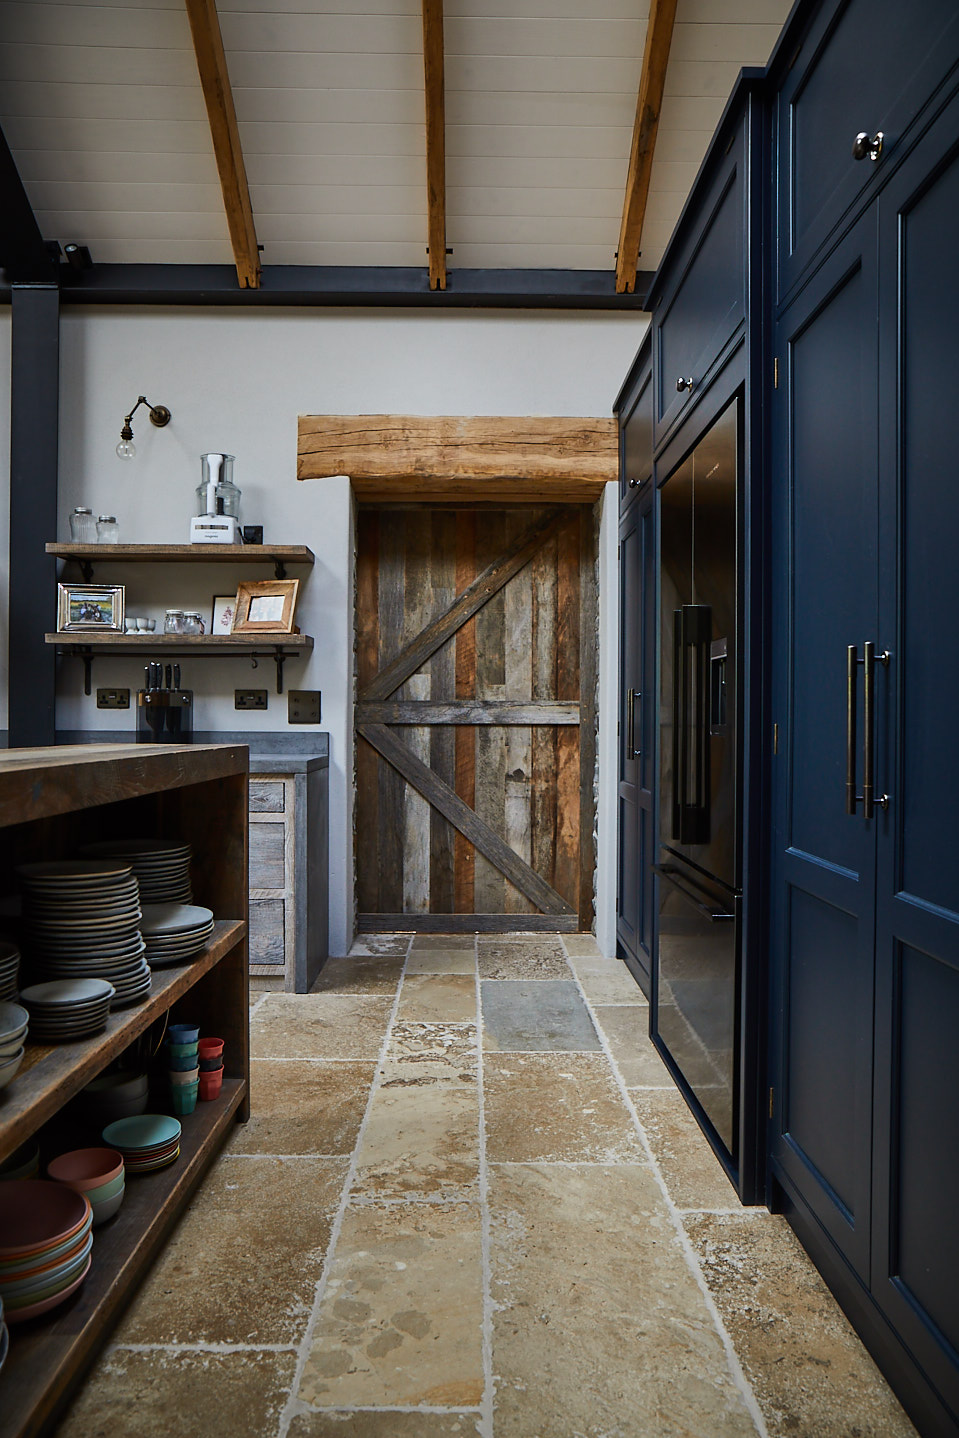 Reclaimed oak sliding barn door next to tall painted dark blue kitchen cabinets